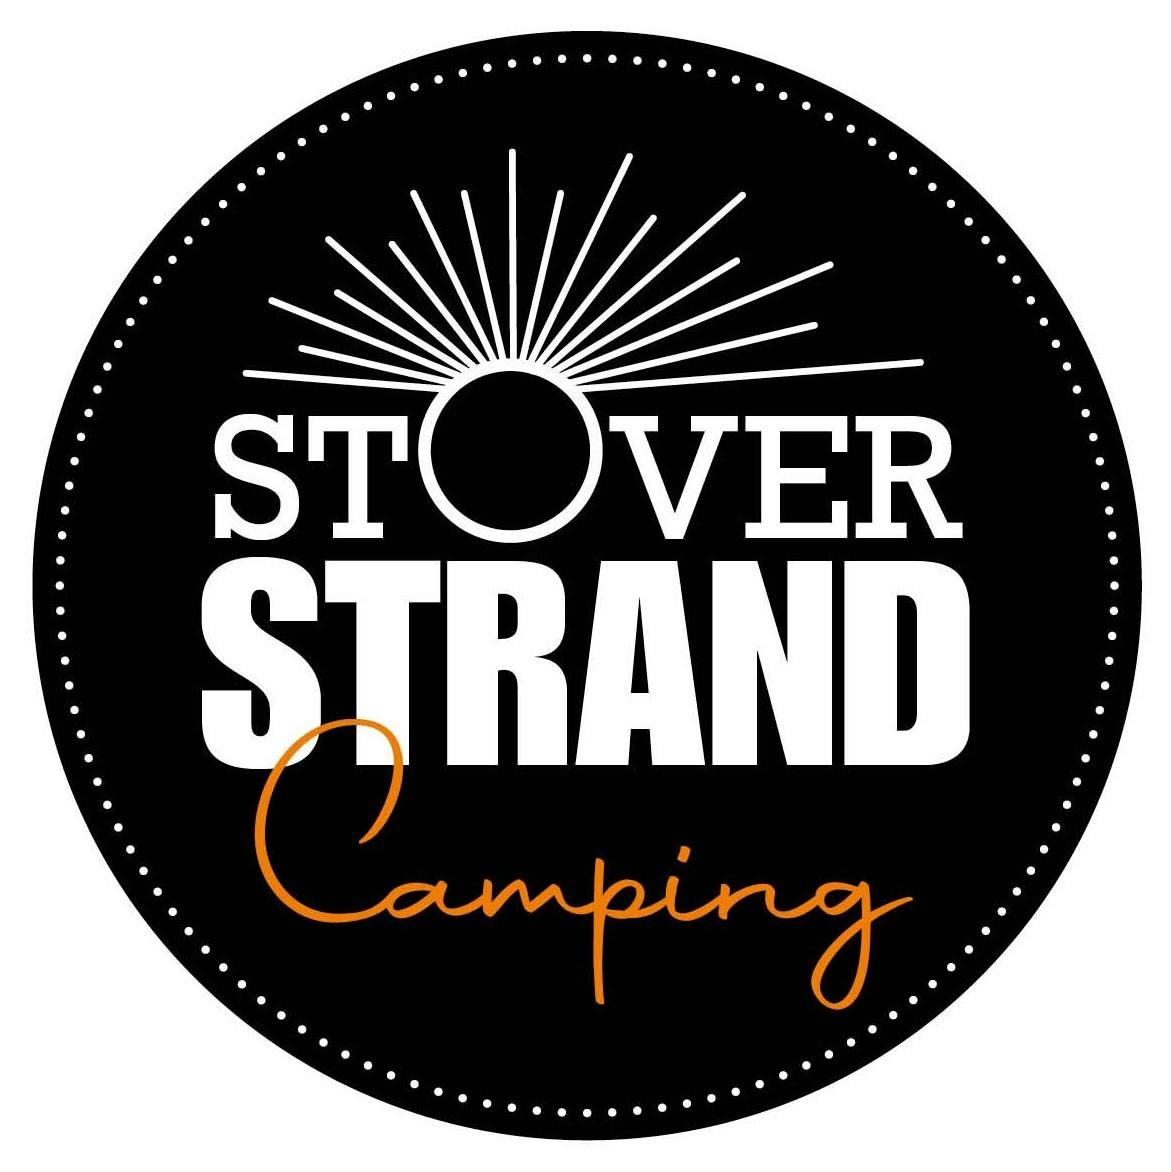 Stover Strand Camping